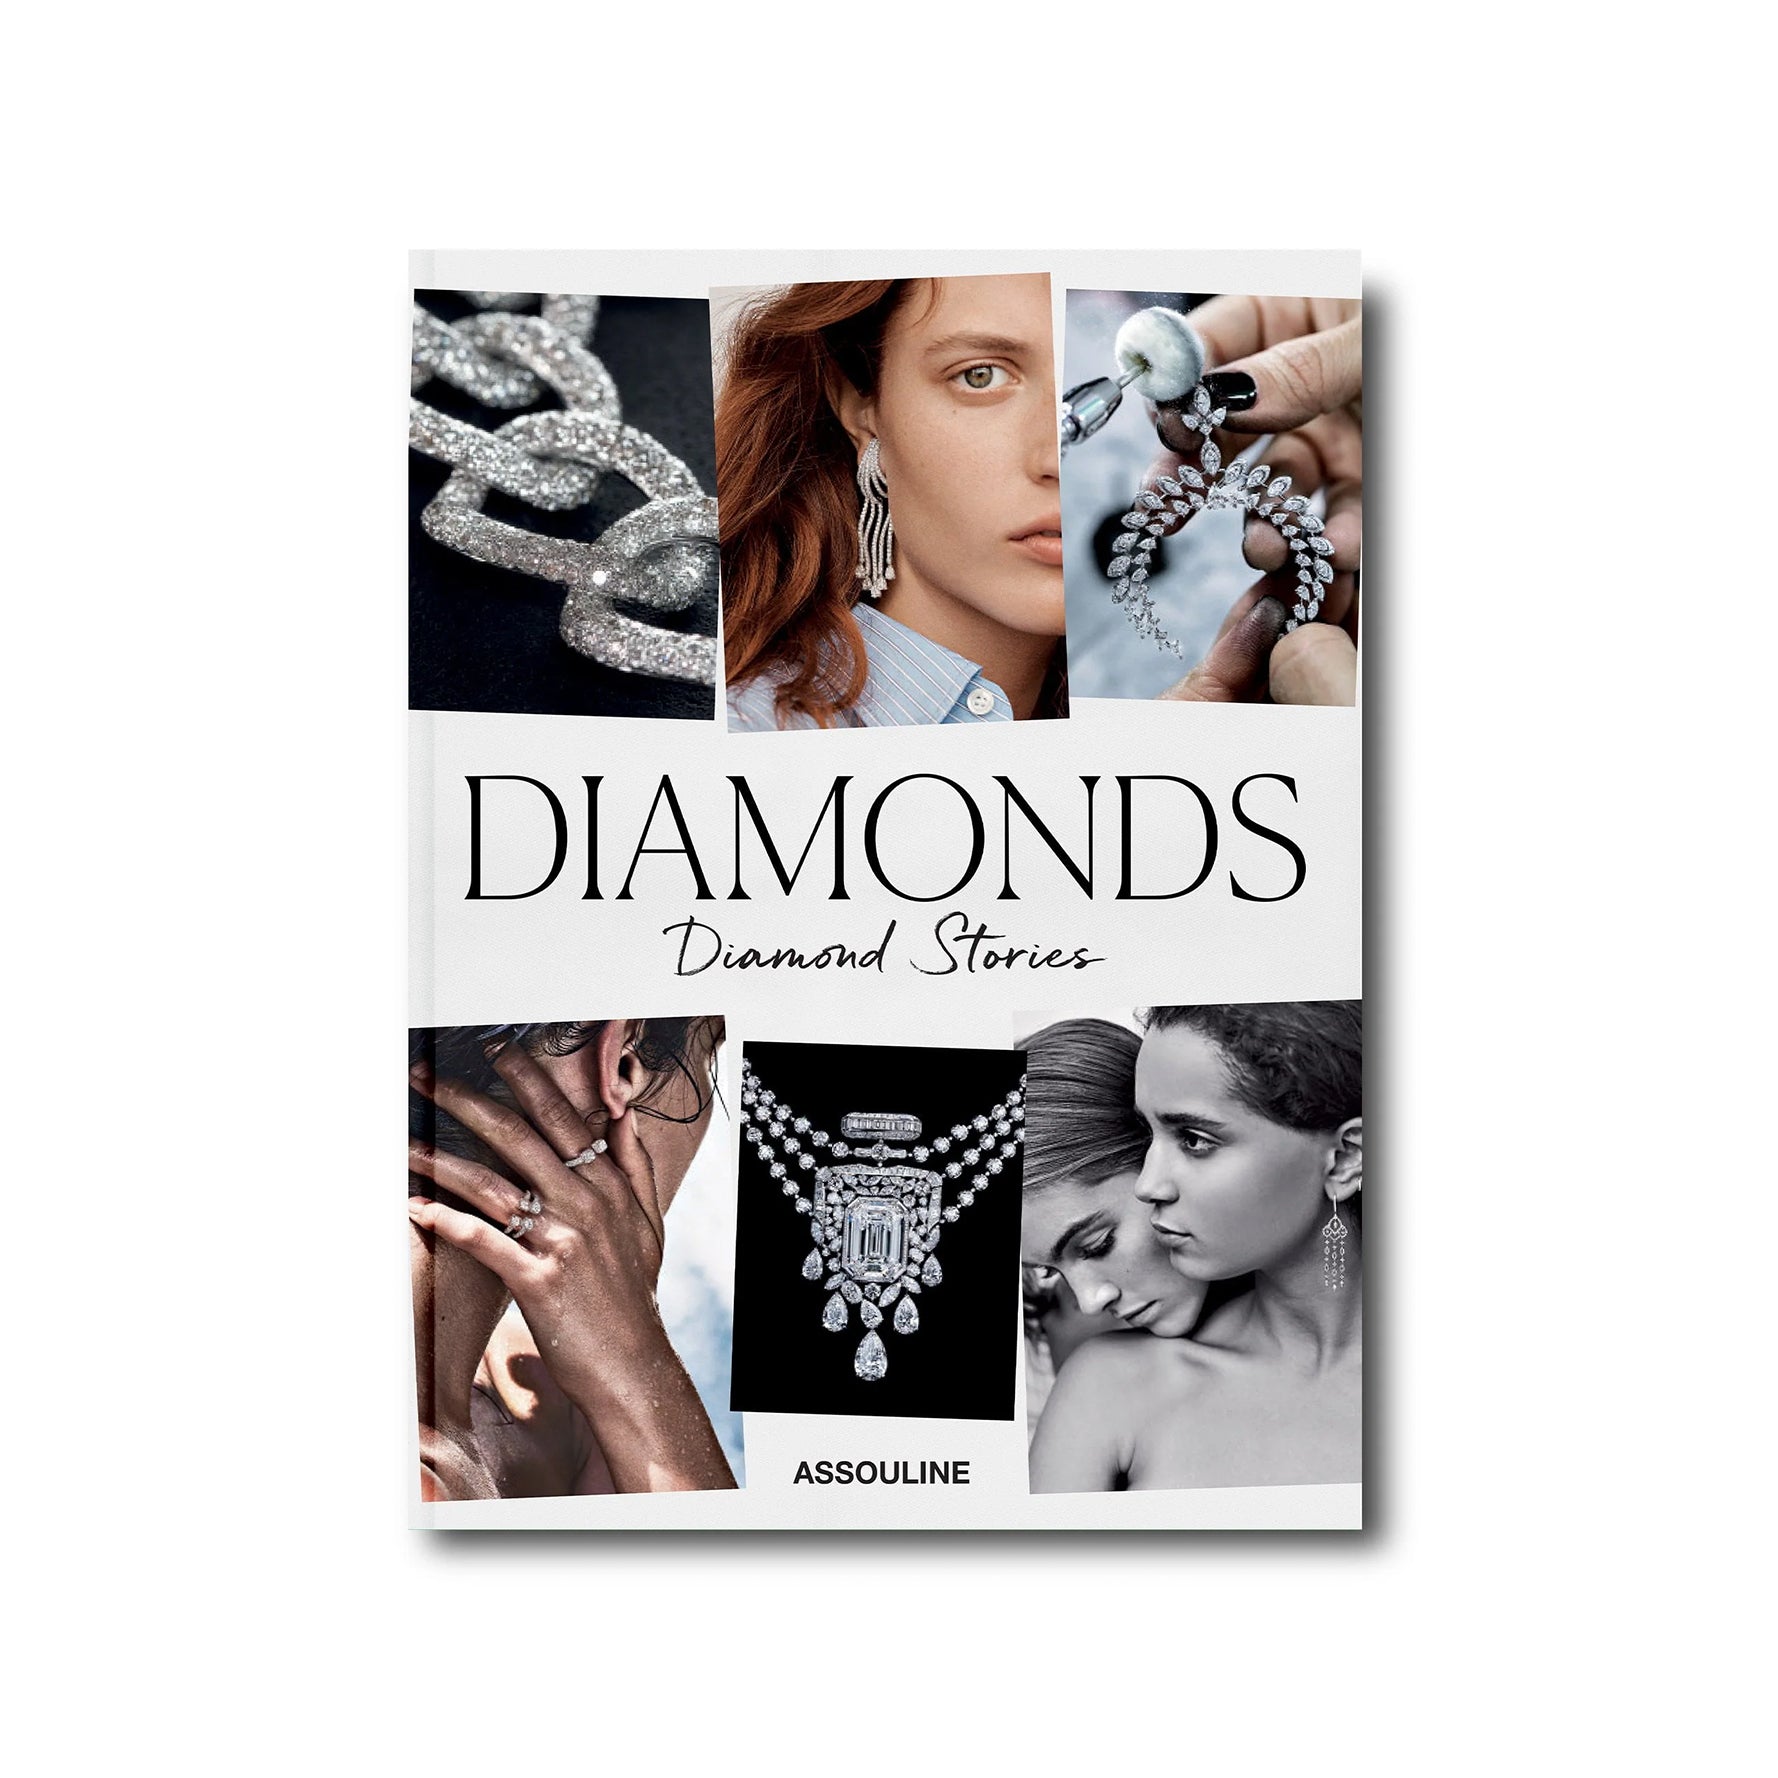 Diamonds: Diamond Stories by Assouline